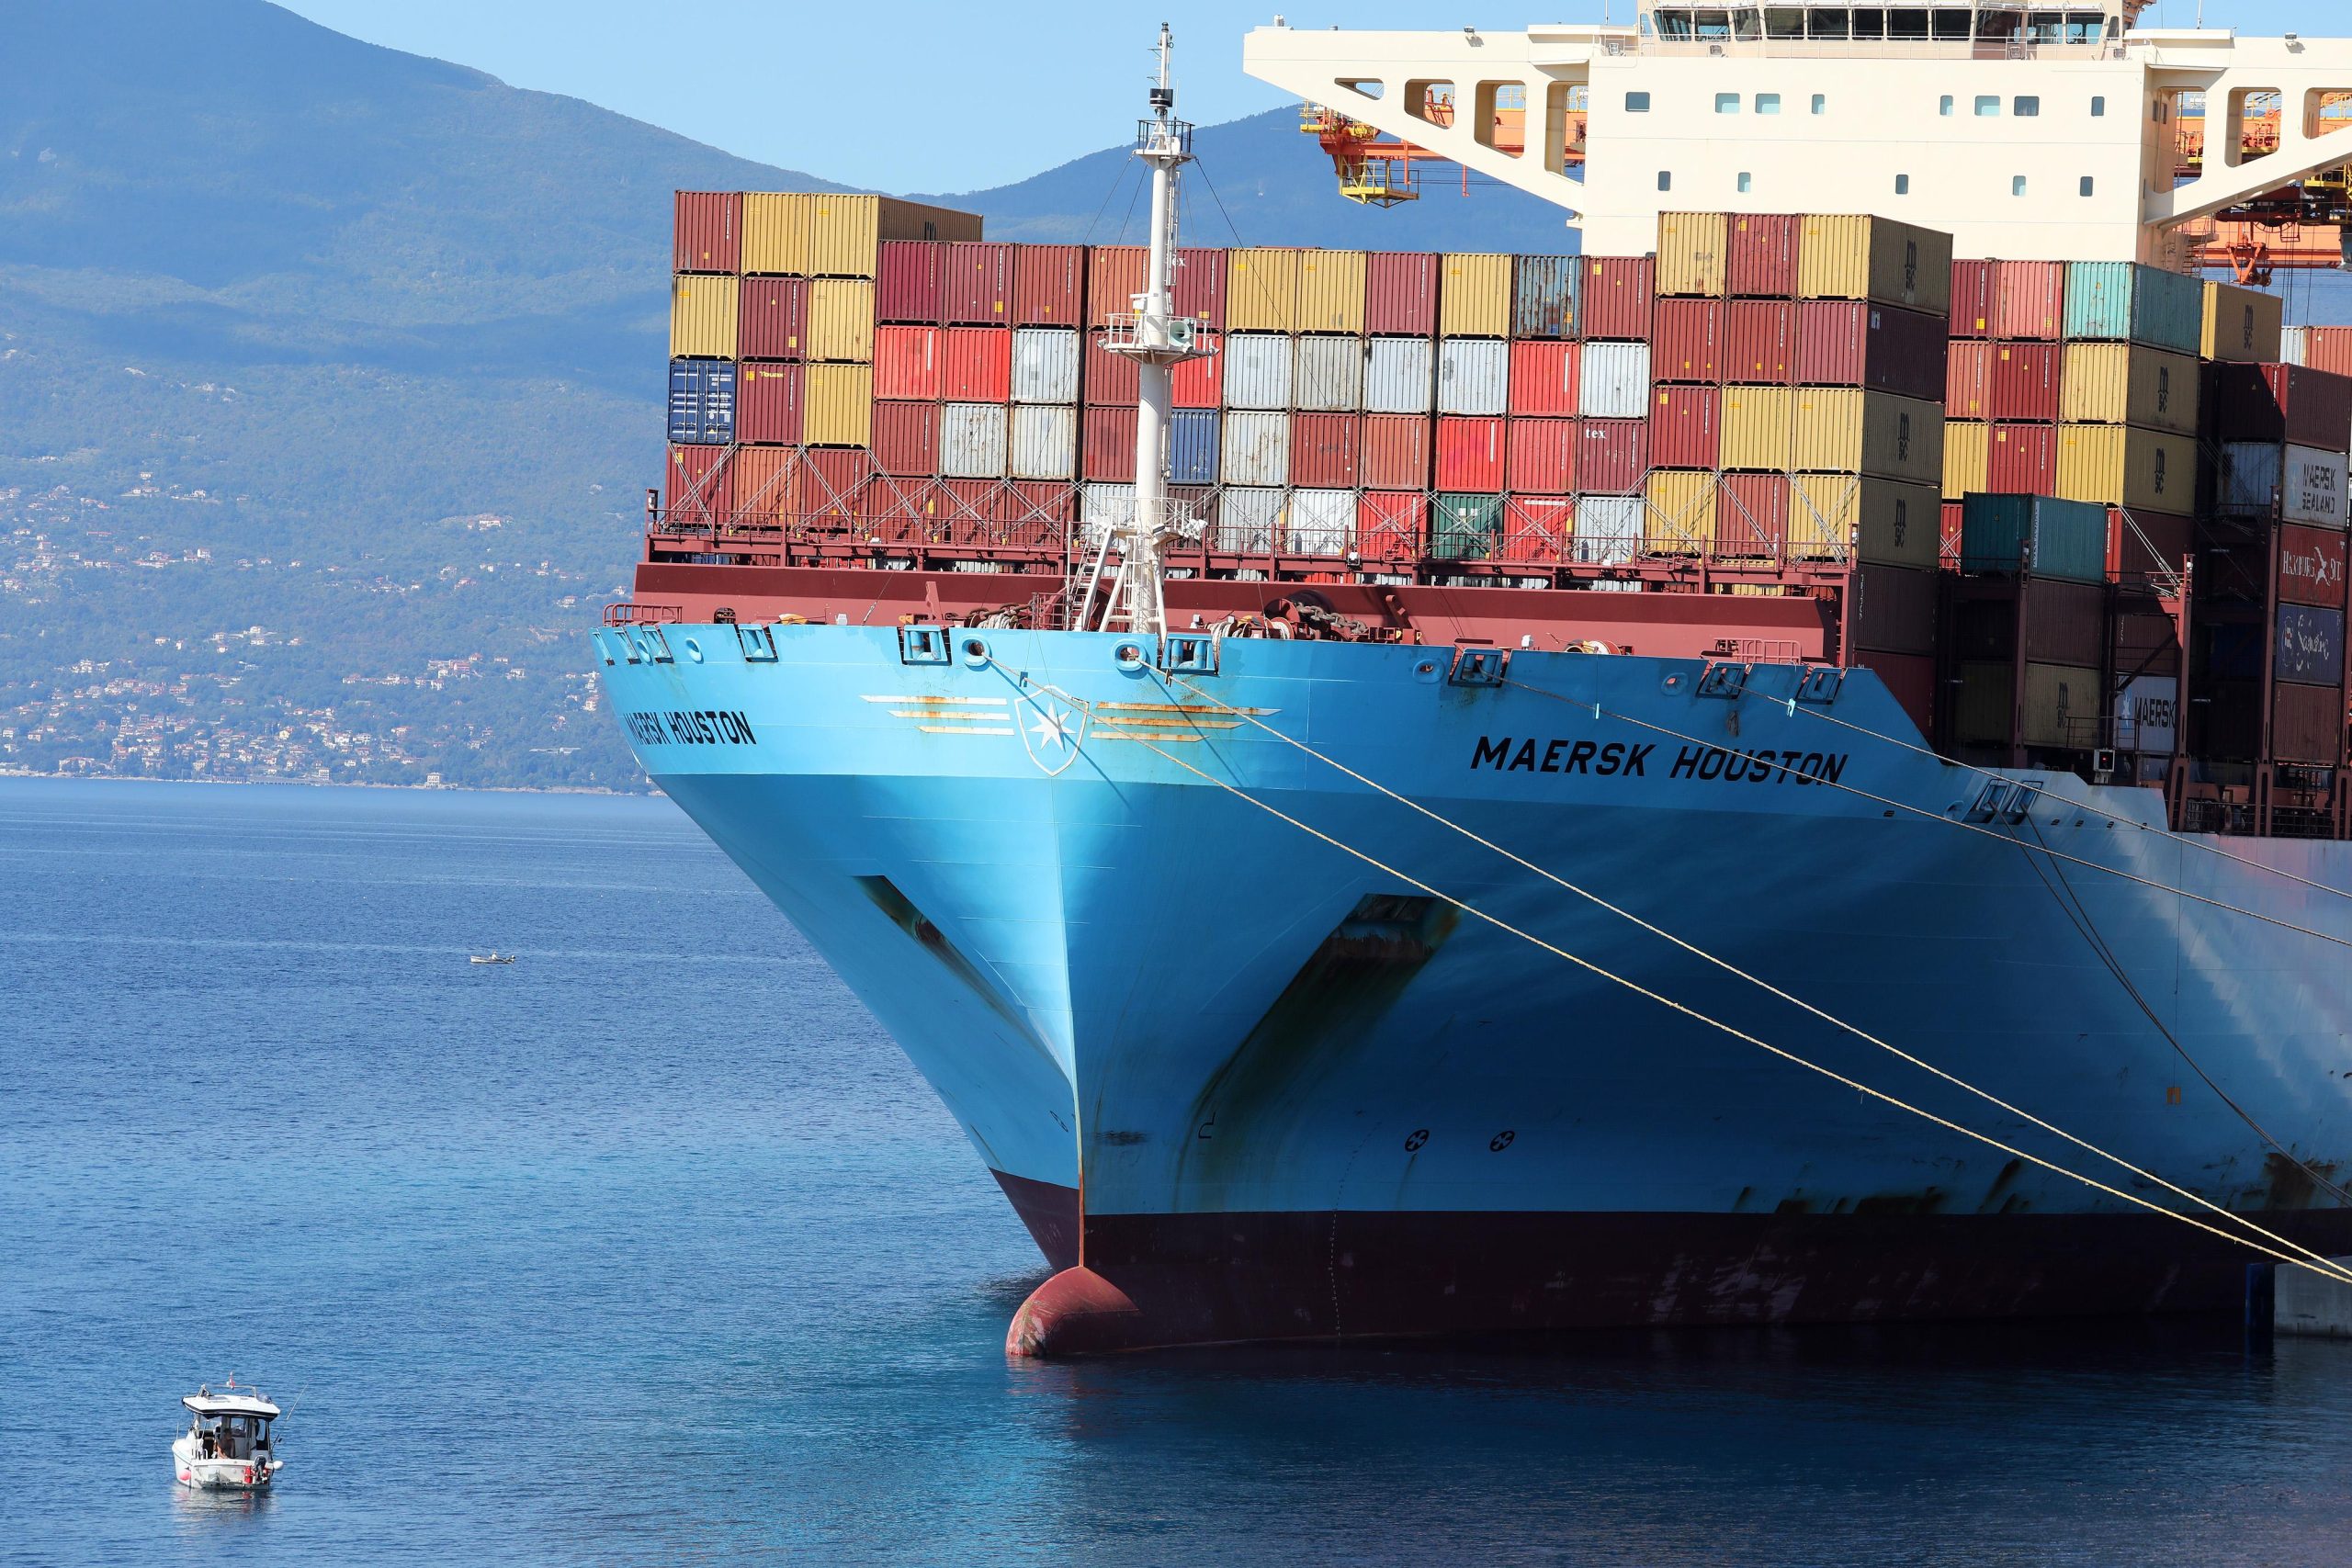 01.09.2021., Rijeka - Brod Maersk Houston prekrcava kontejnere na kontejnerskom terminalu rijecke luke na Brajdici. 
Photo: Goran Kovacic/PIXSELL